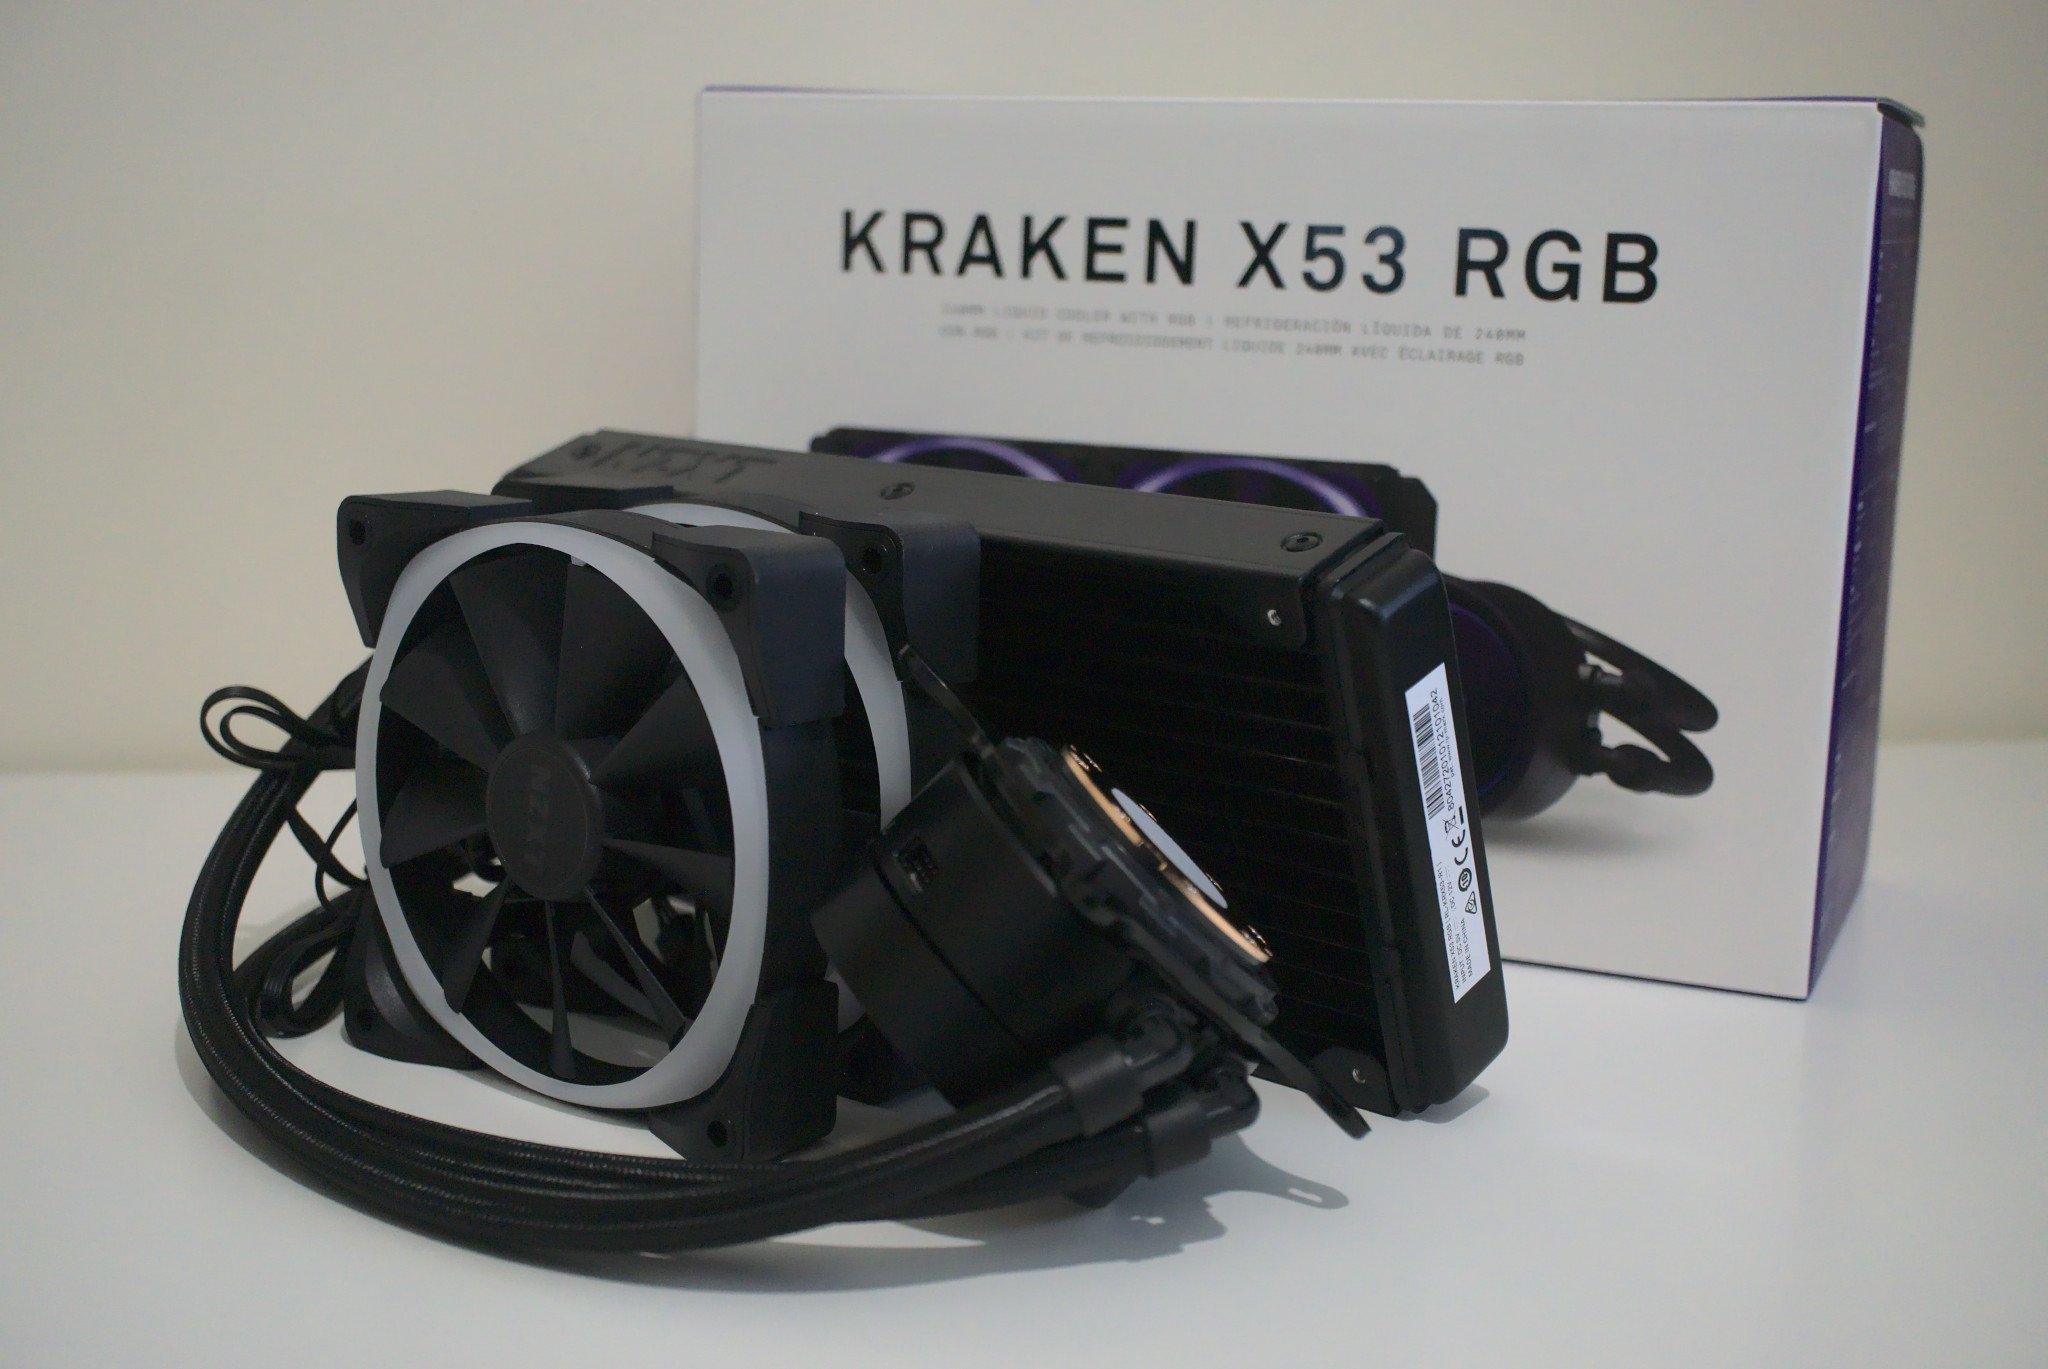 NZXT Kraken X53 RGB AIO review: Attractive design and impressive